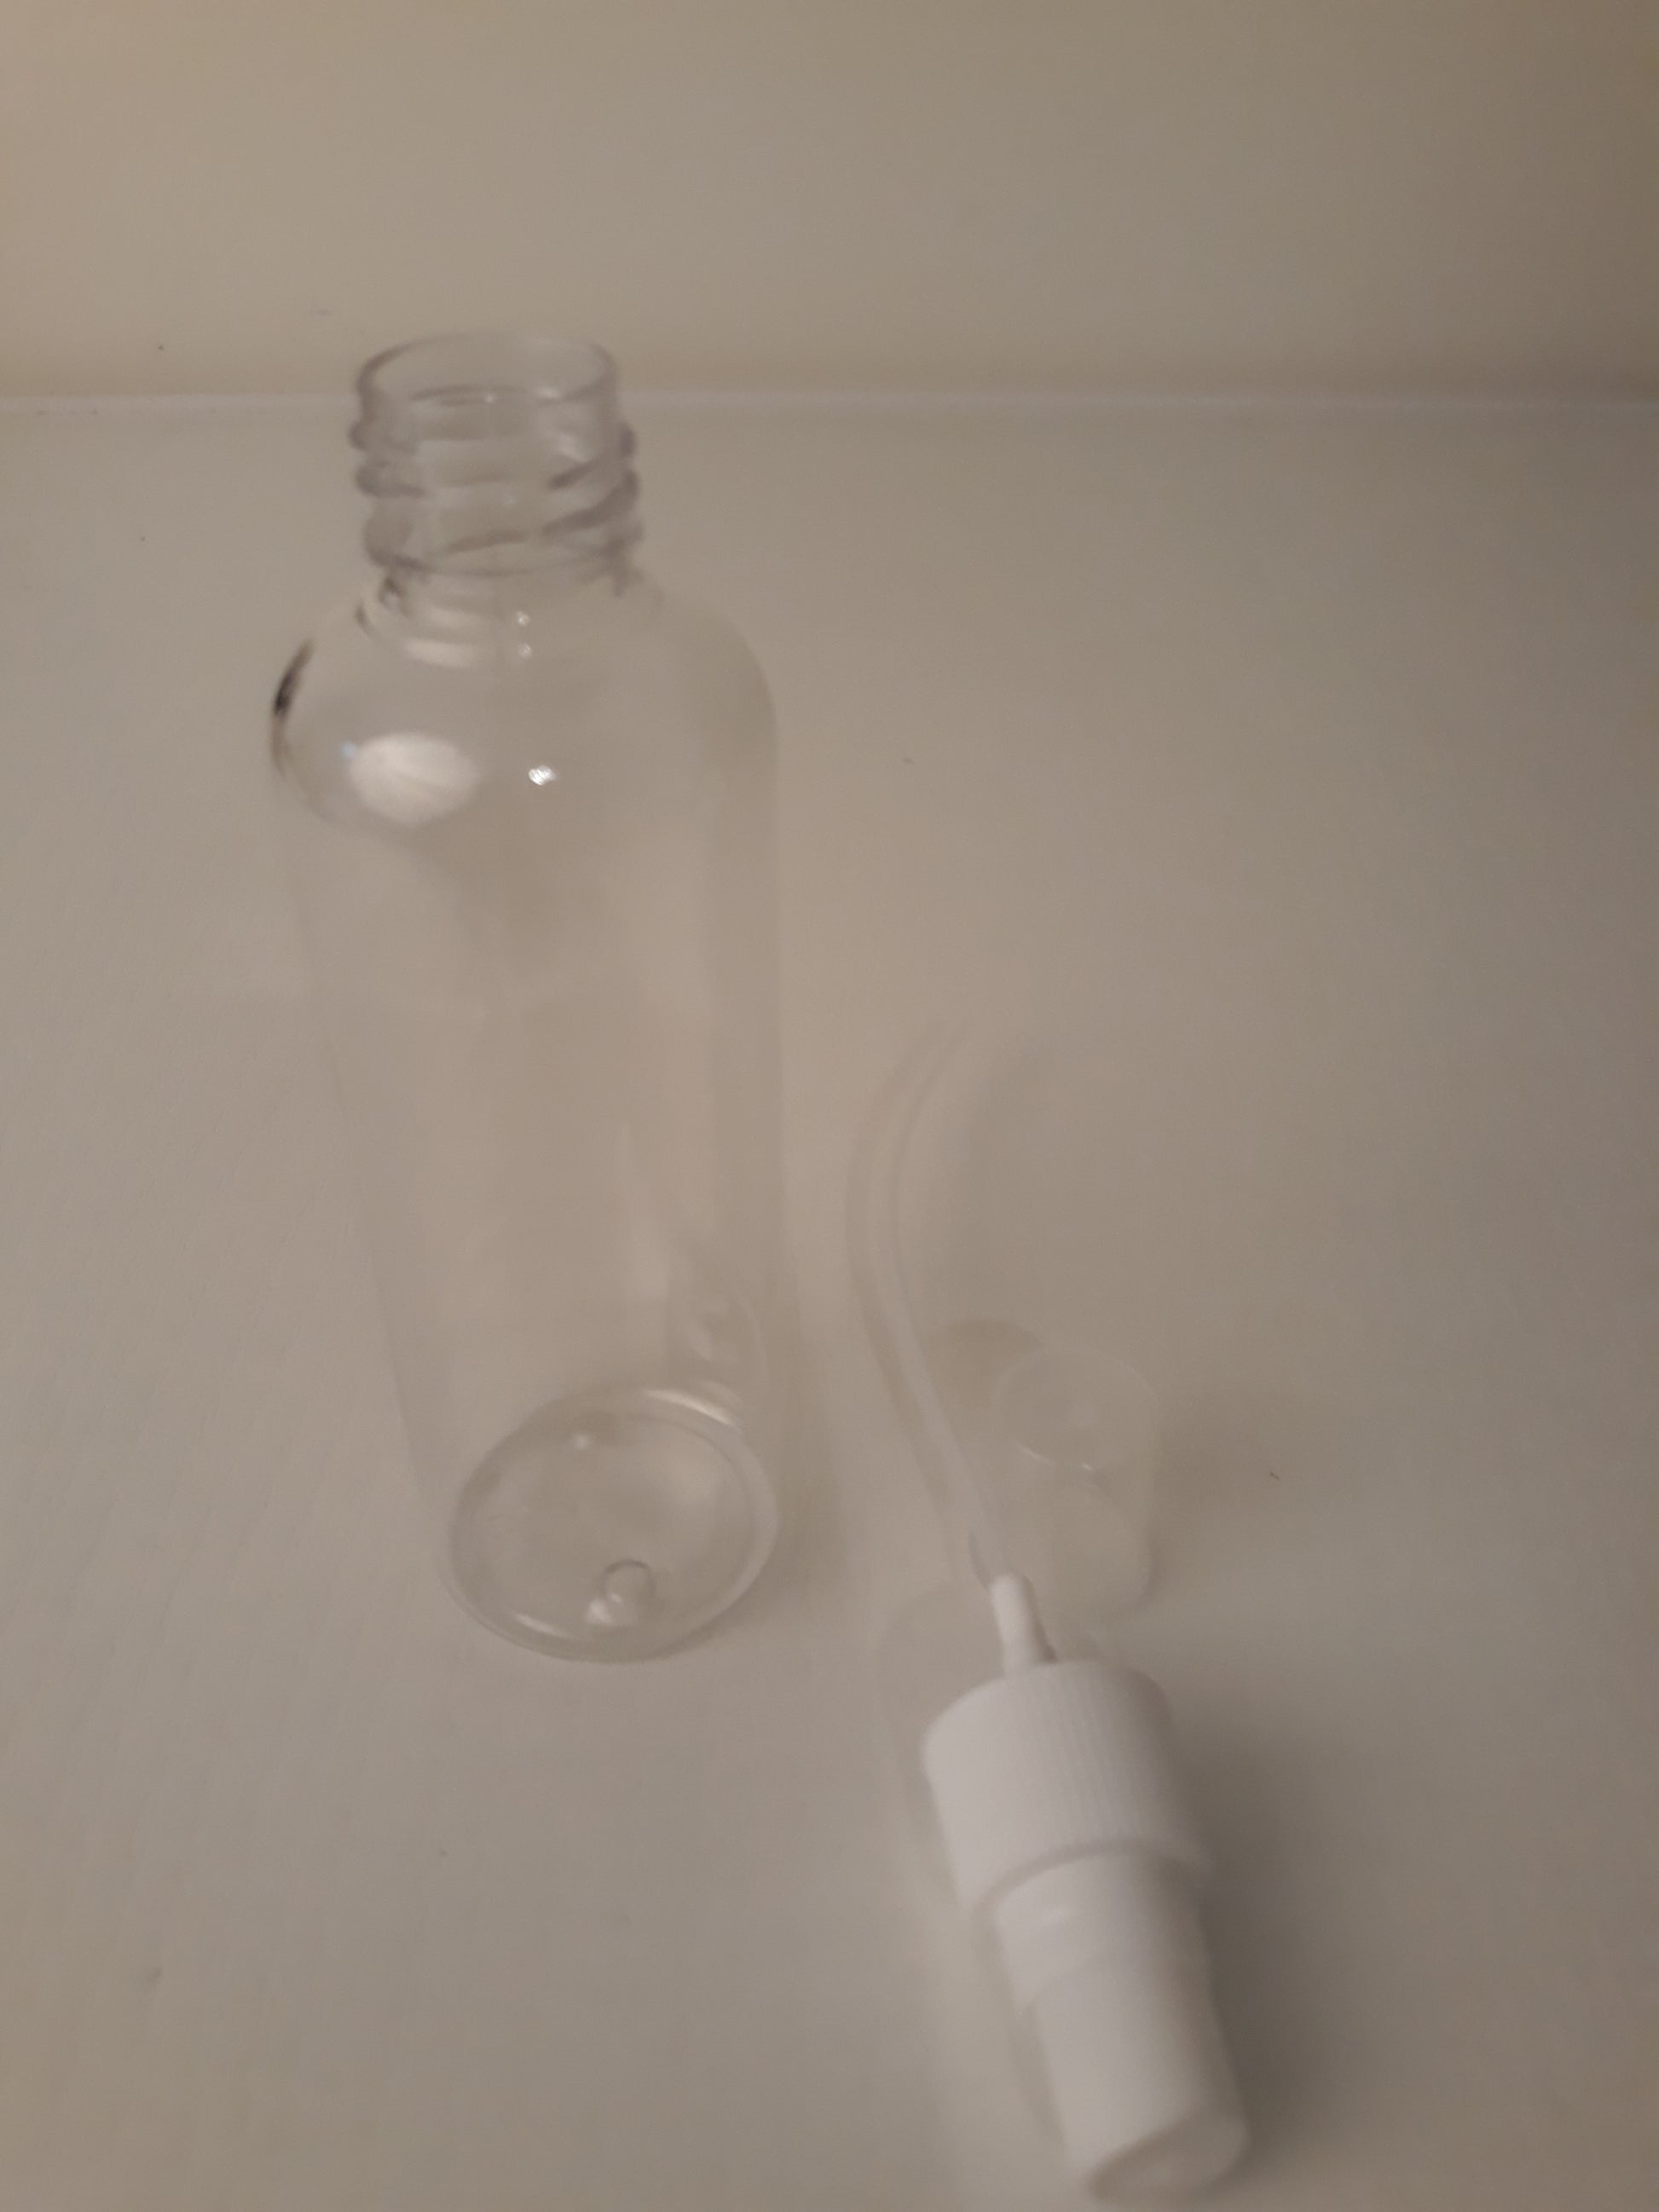 Flacon spray 100 ml - bioriental